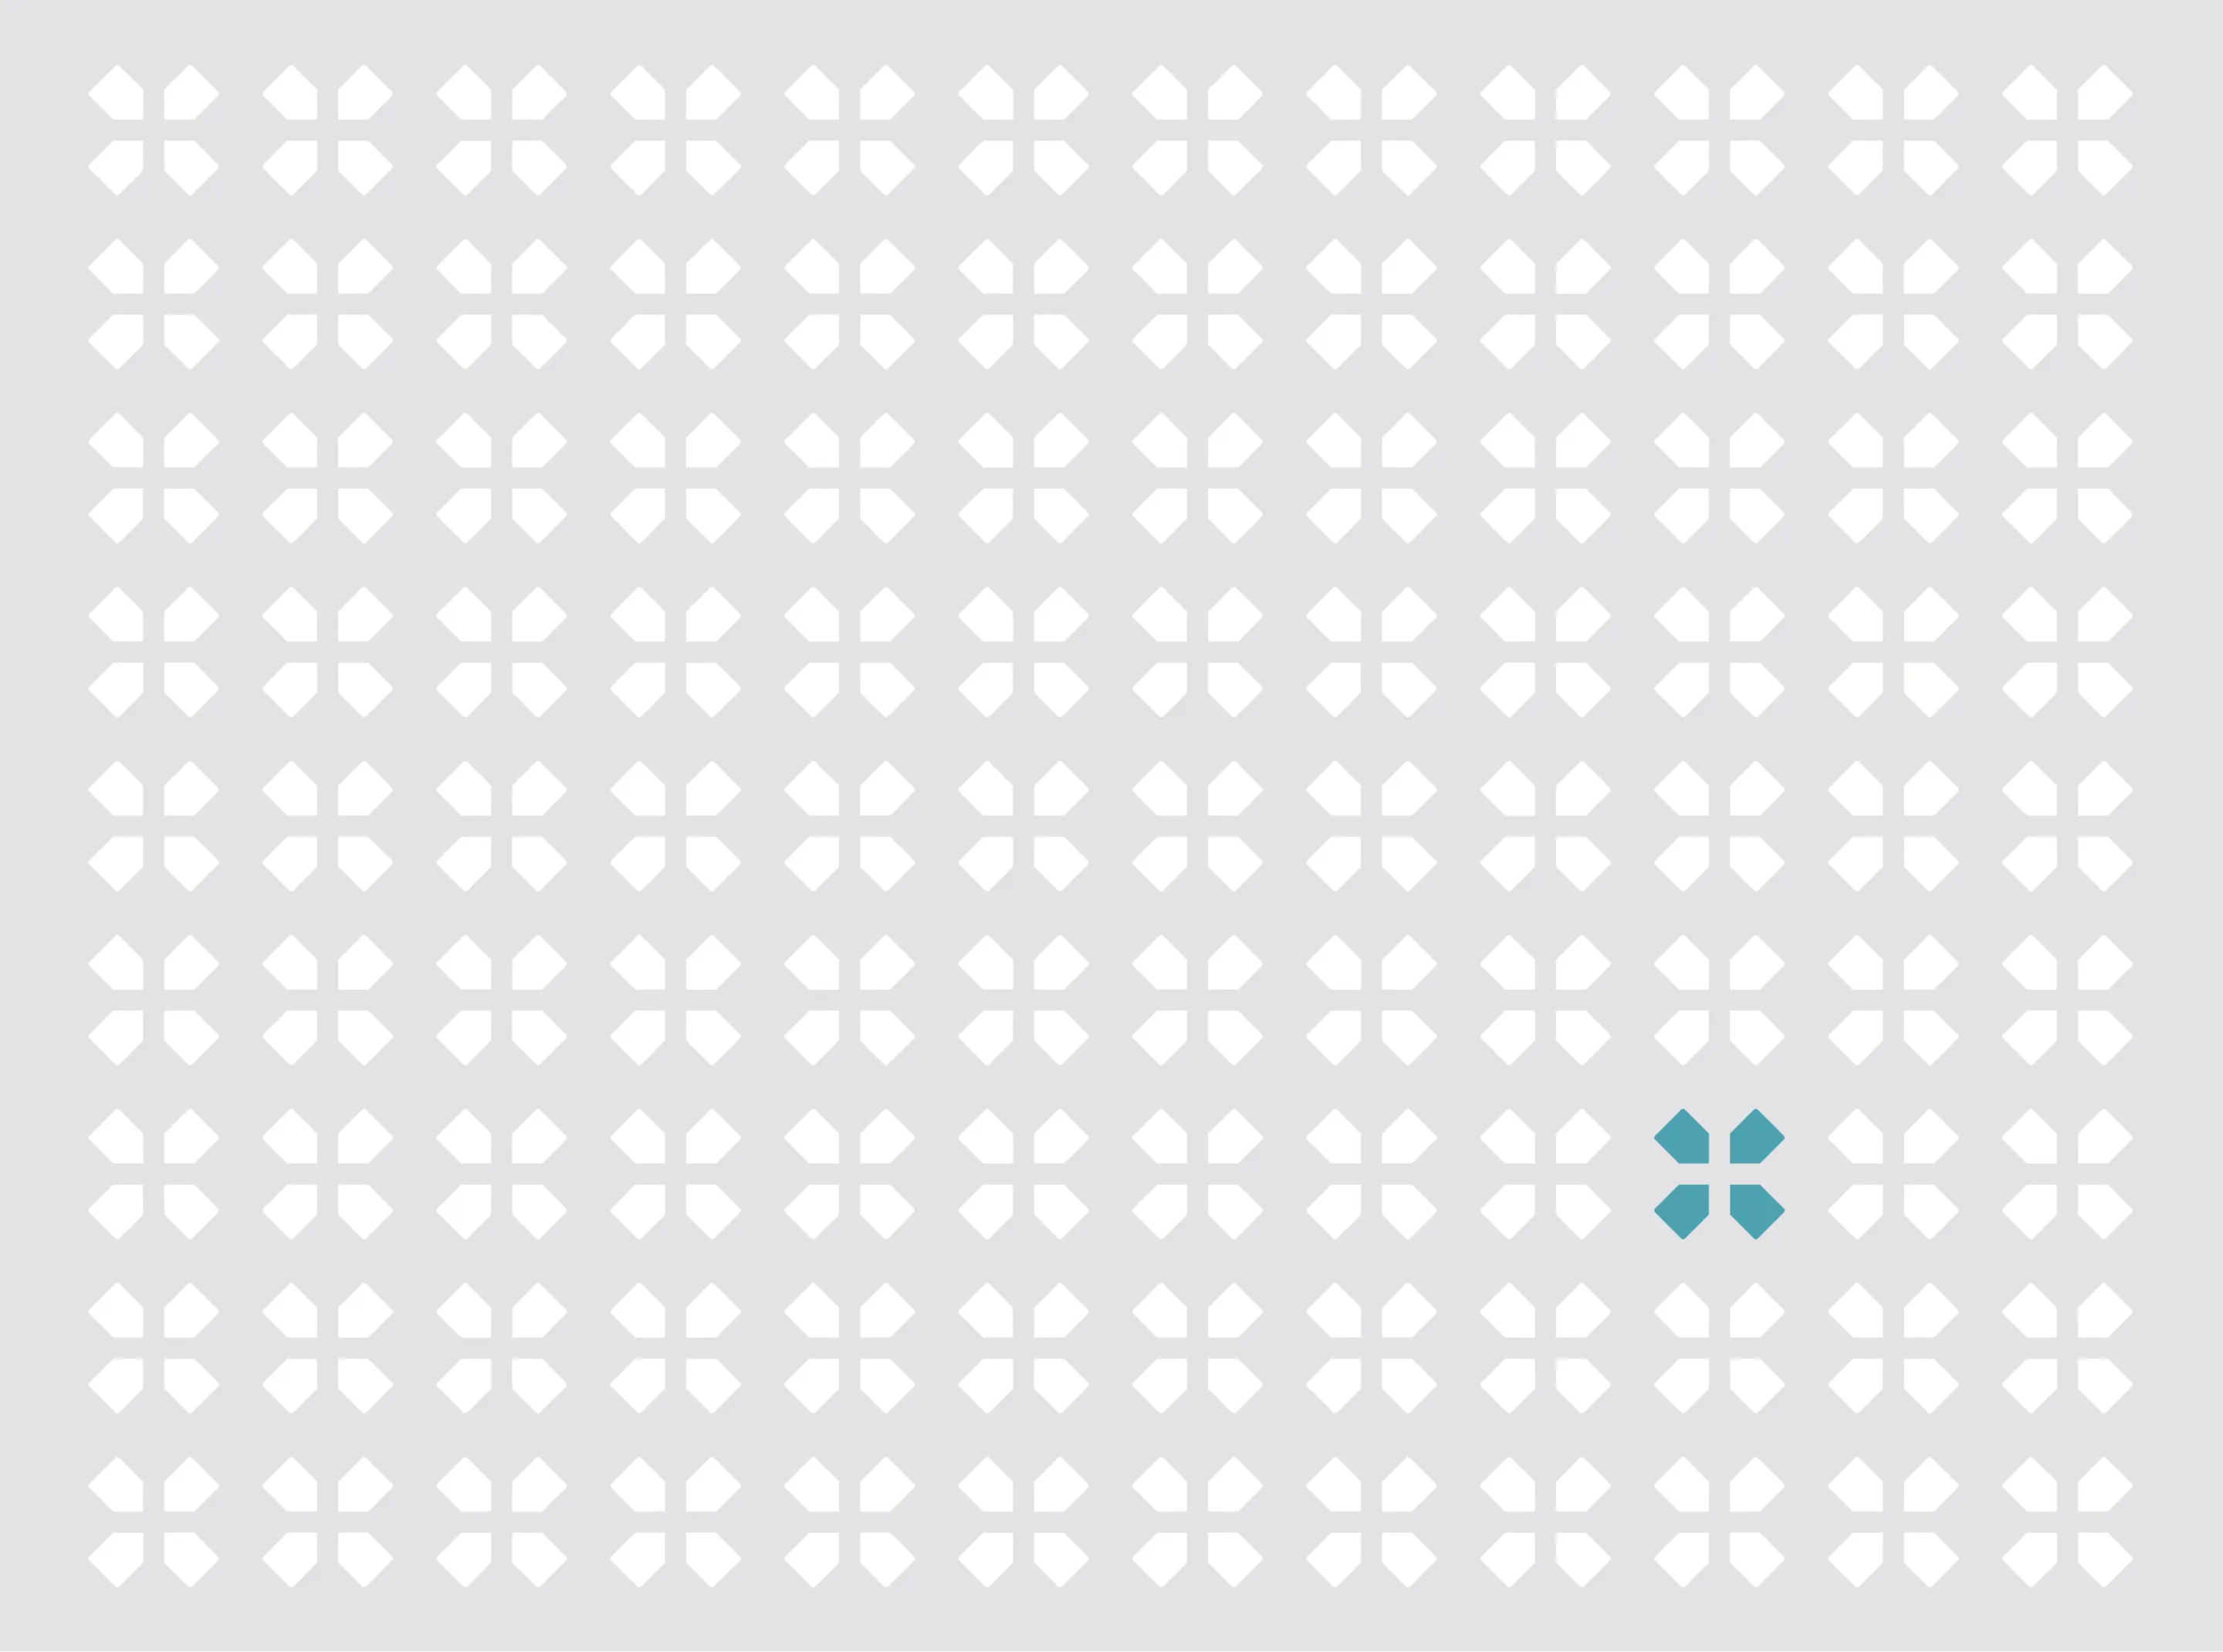 Image of BriteLab pattern design.